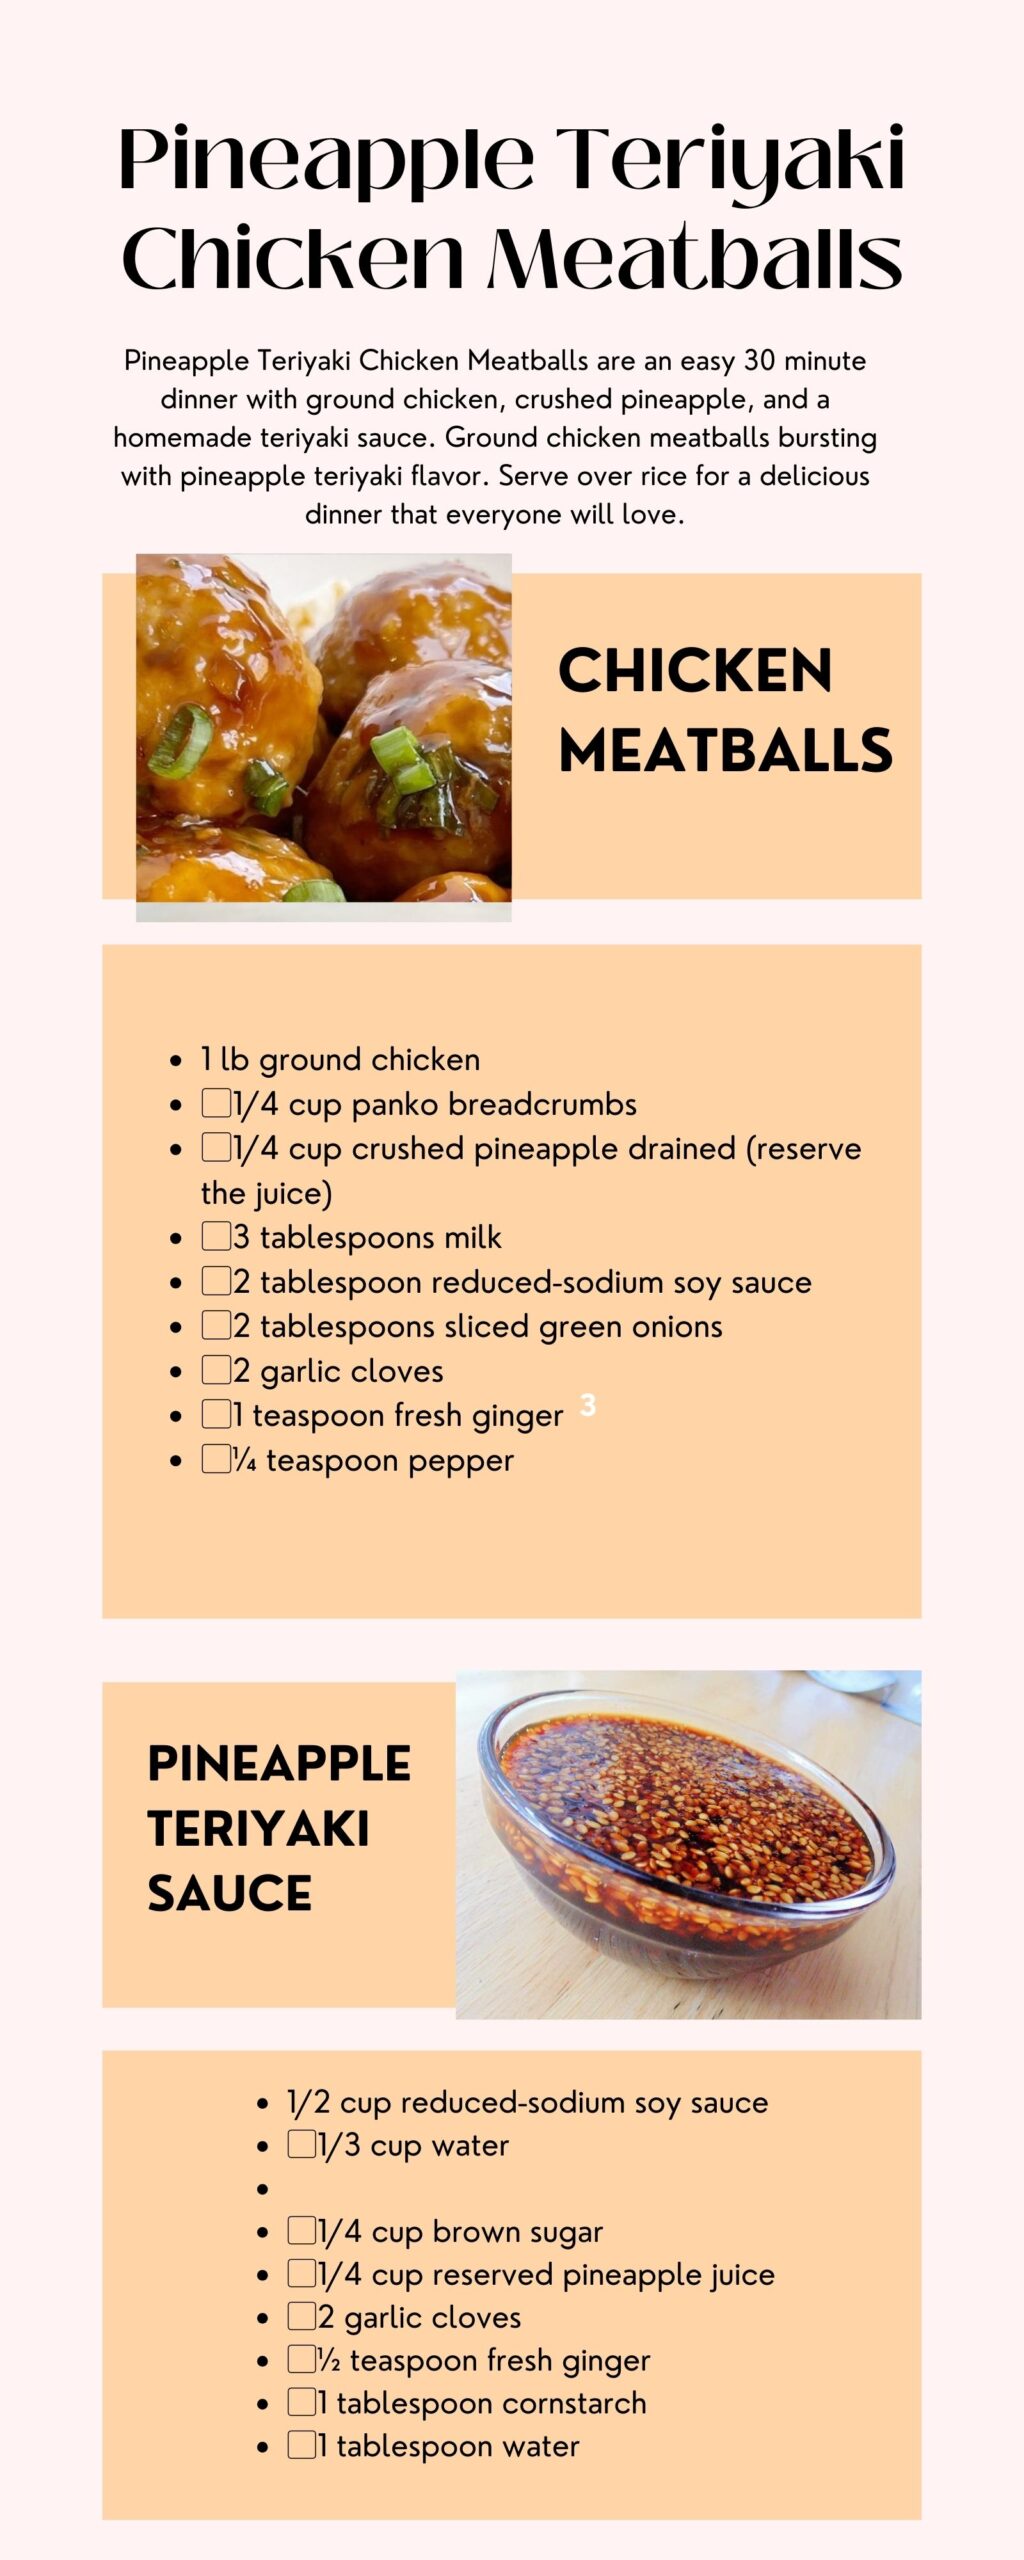 Pineapple Teriyaki Chicken Meatballs infographic